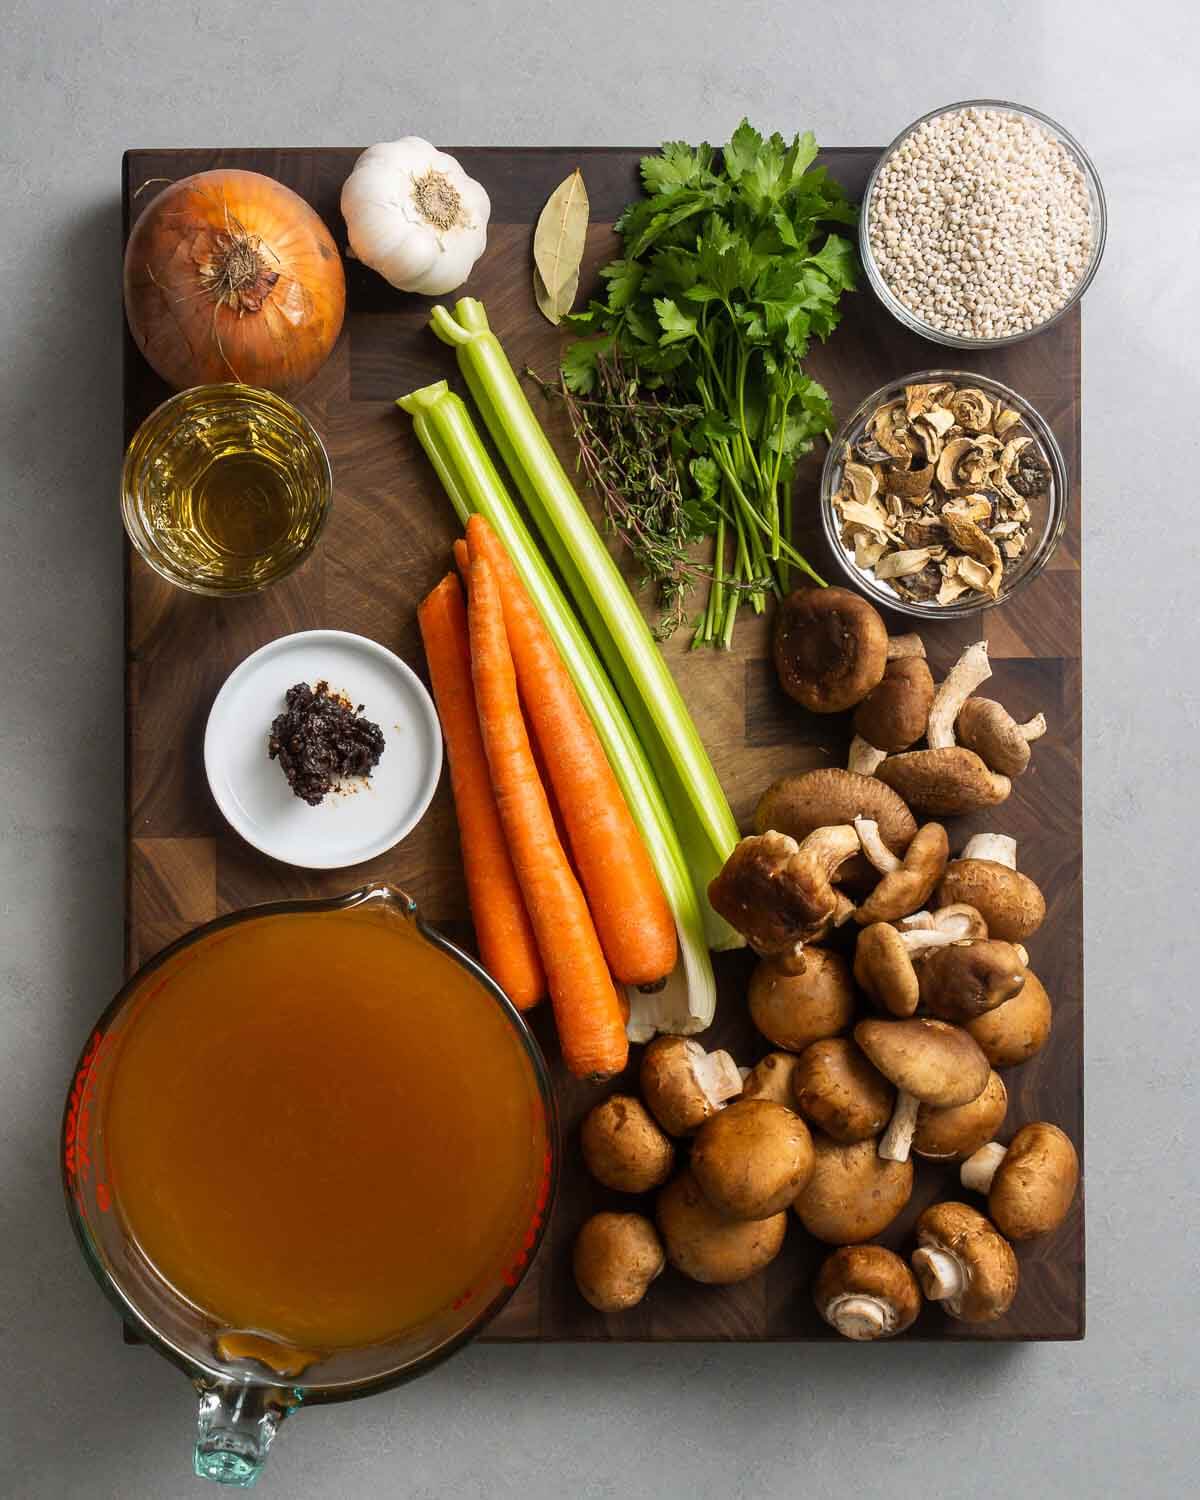 Ingredients shown, onion, garlic, herbs, barley, dry mushrooms, wine, miso paste, celery, carrots, mushrooms, and vegetable stock.